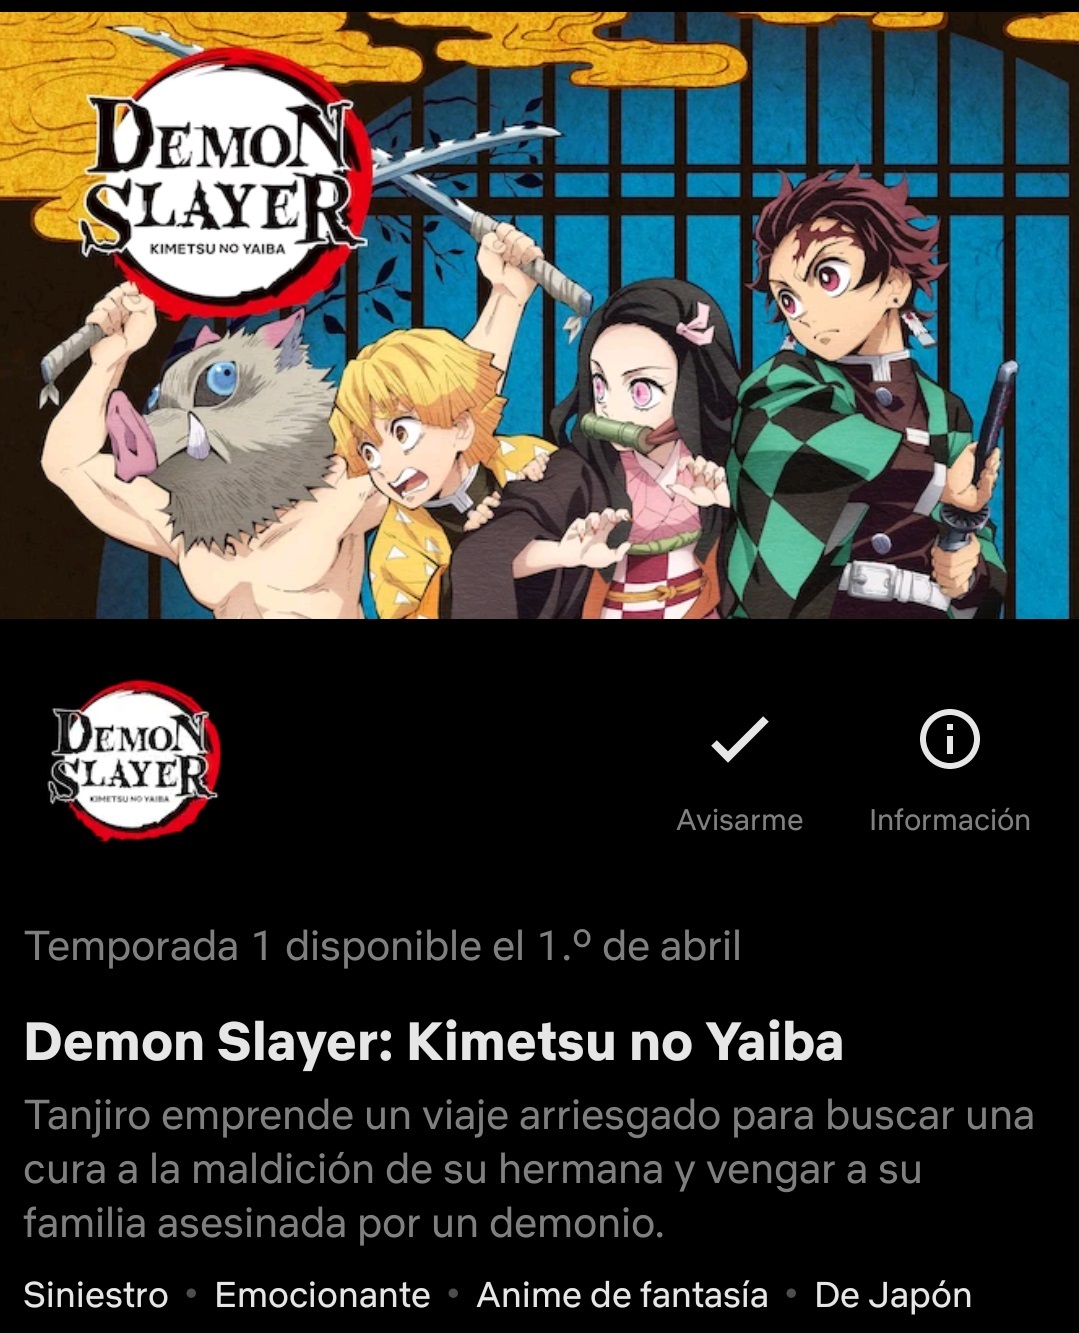 La temporada 2 de Demon Slayer: Kimetsu no Yaiba llega a Netflix